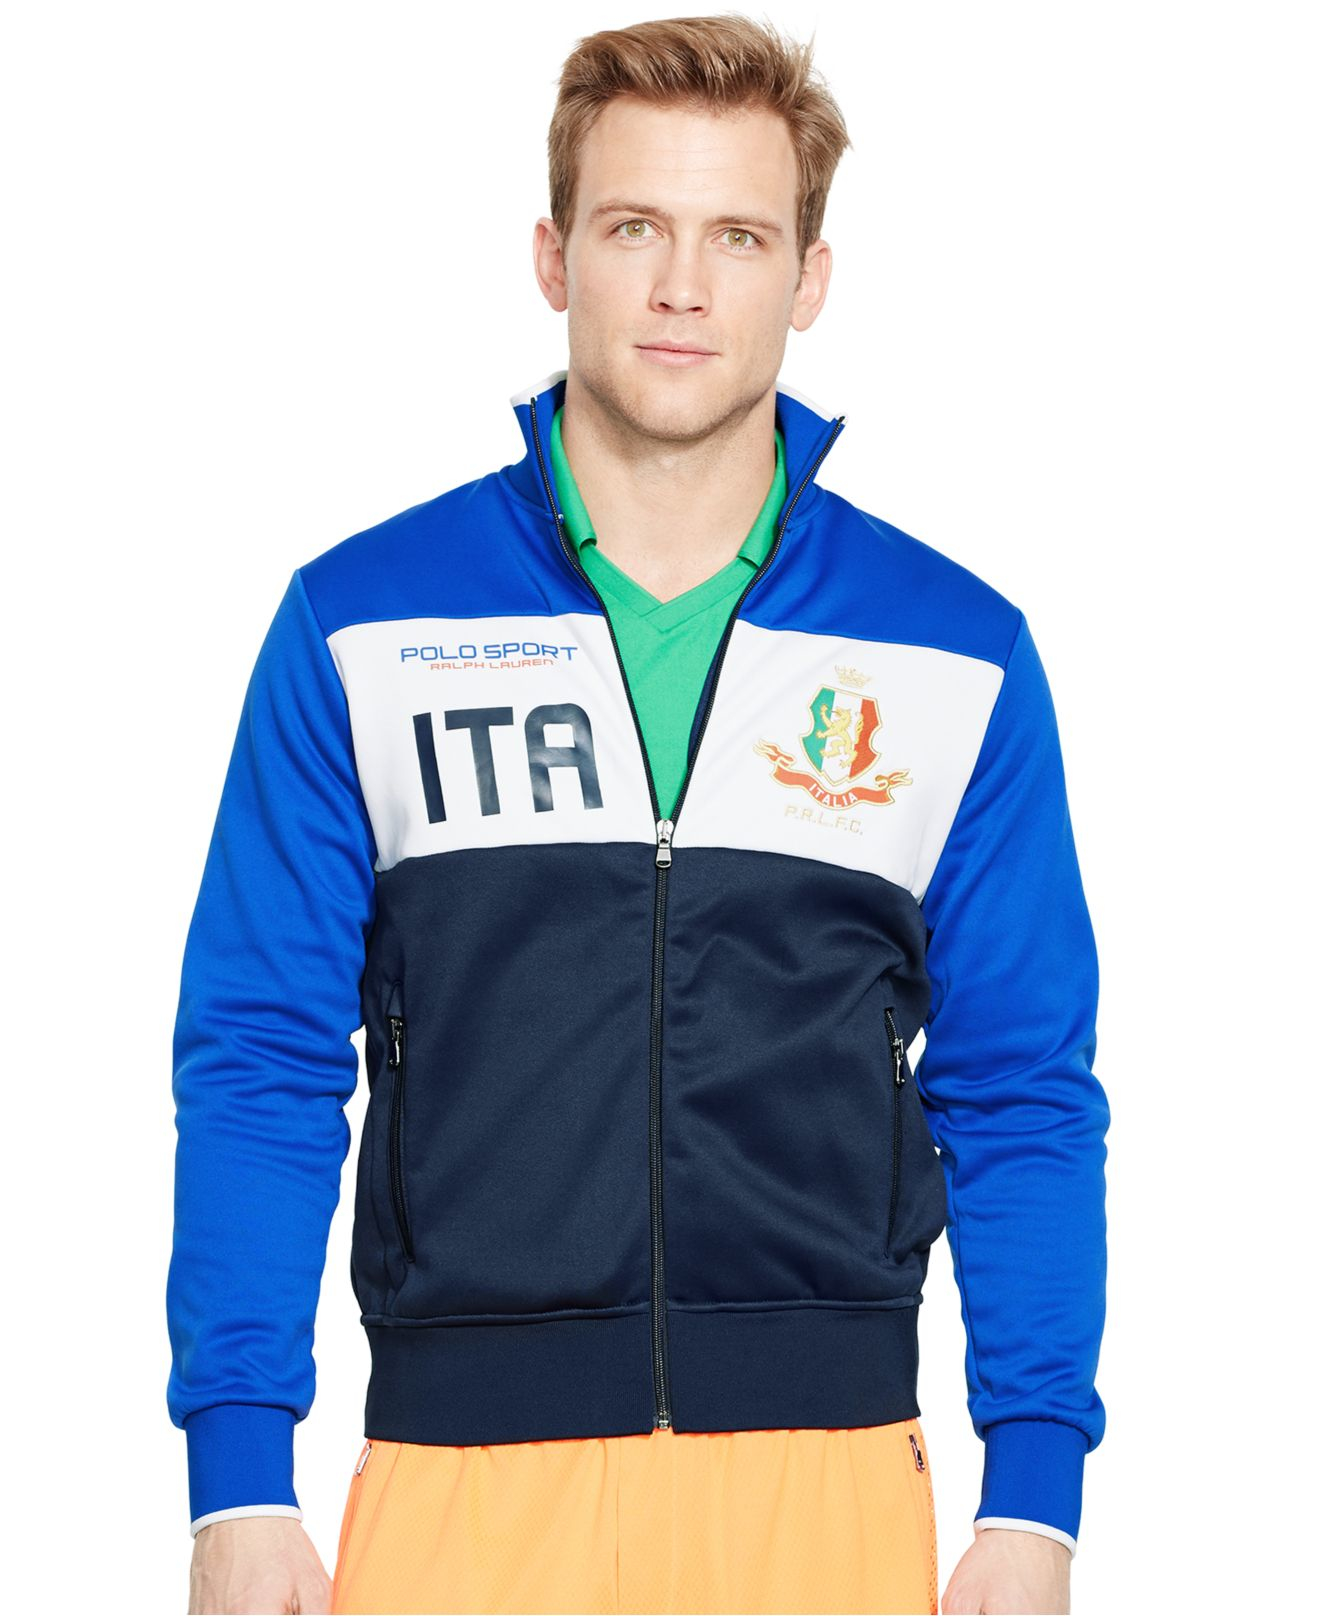 mens polo sport jacket